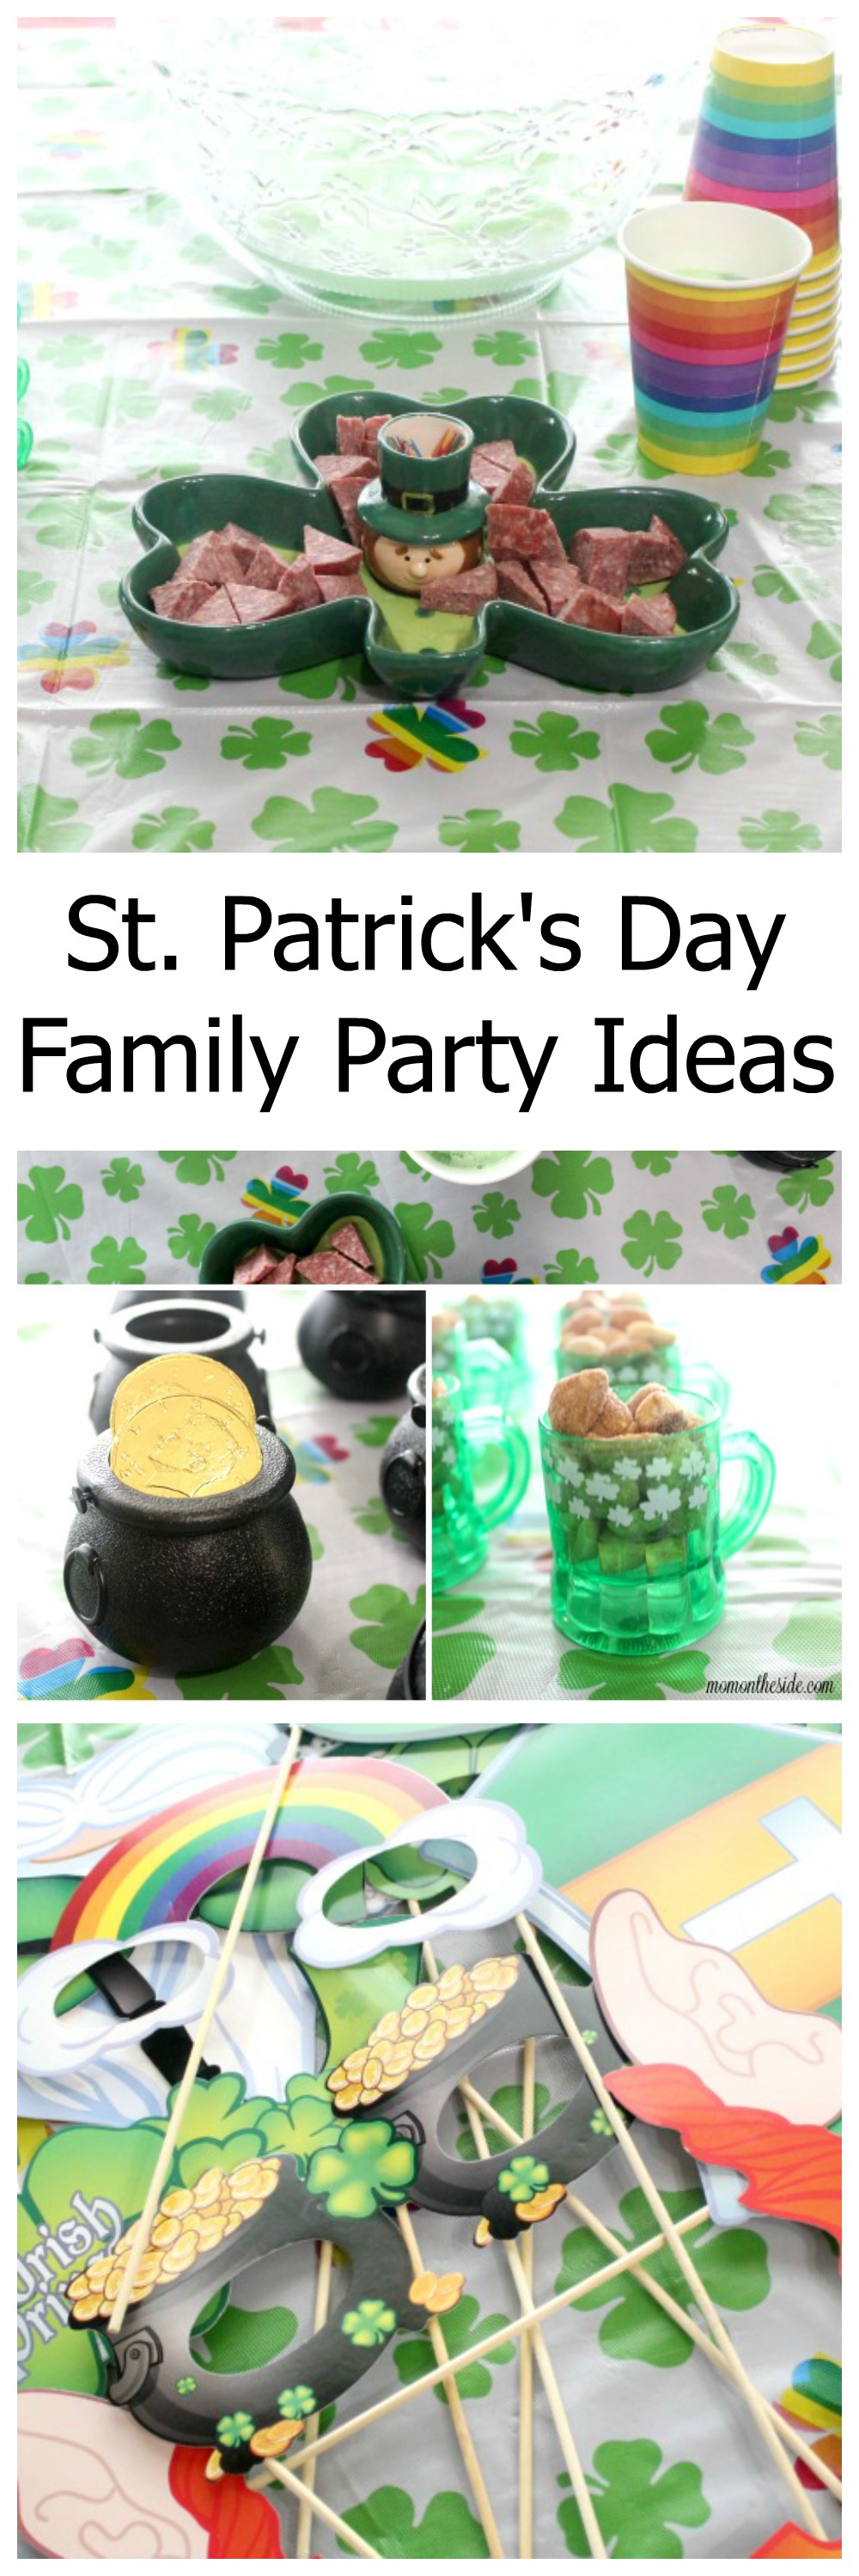 St. Patrick's Day Family Party Ideas